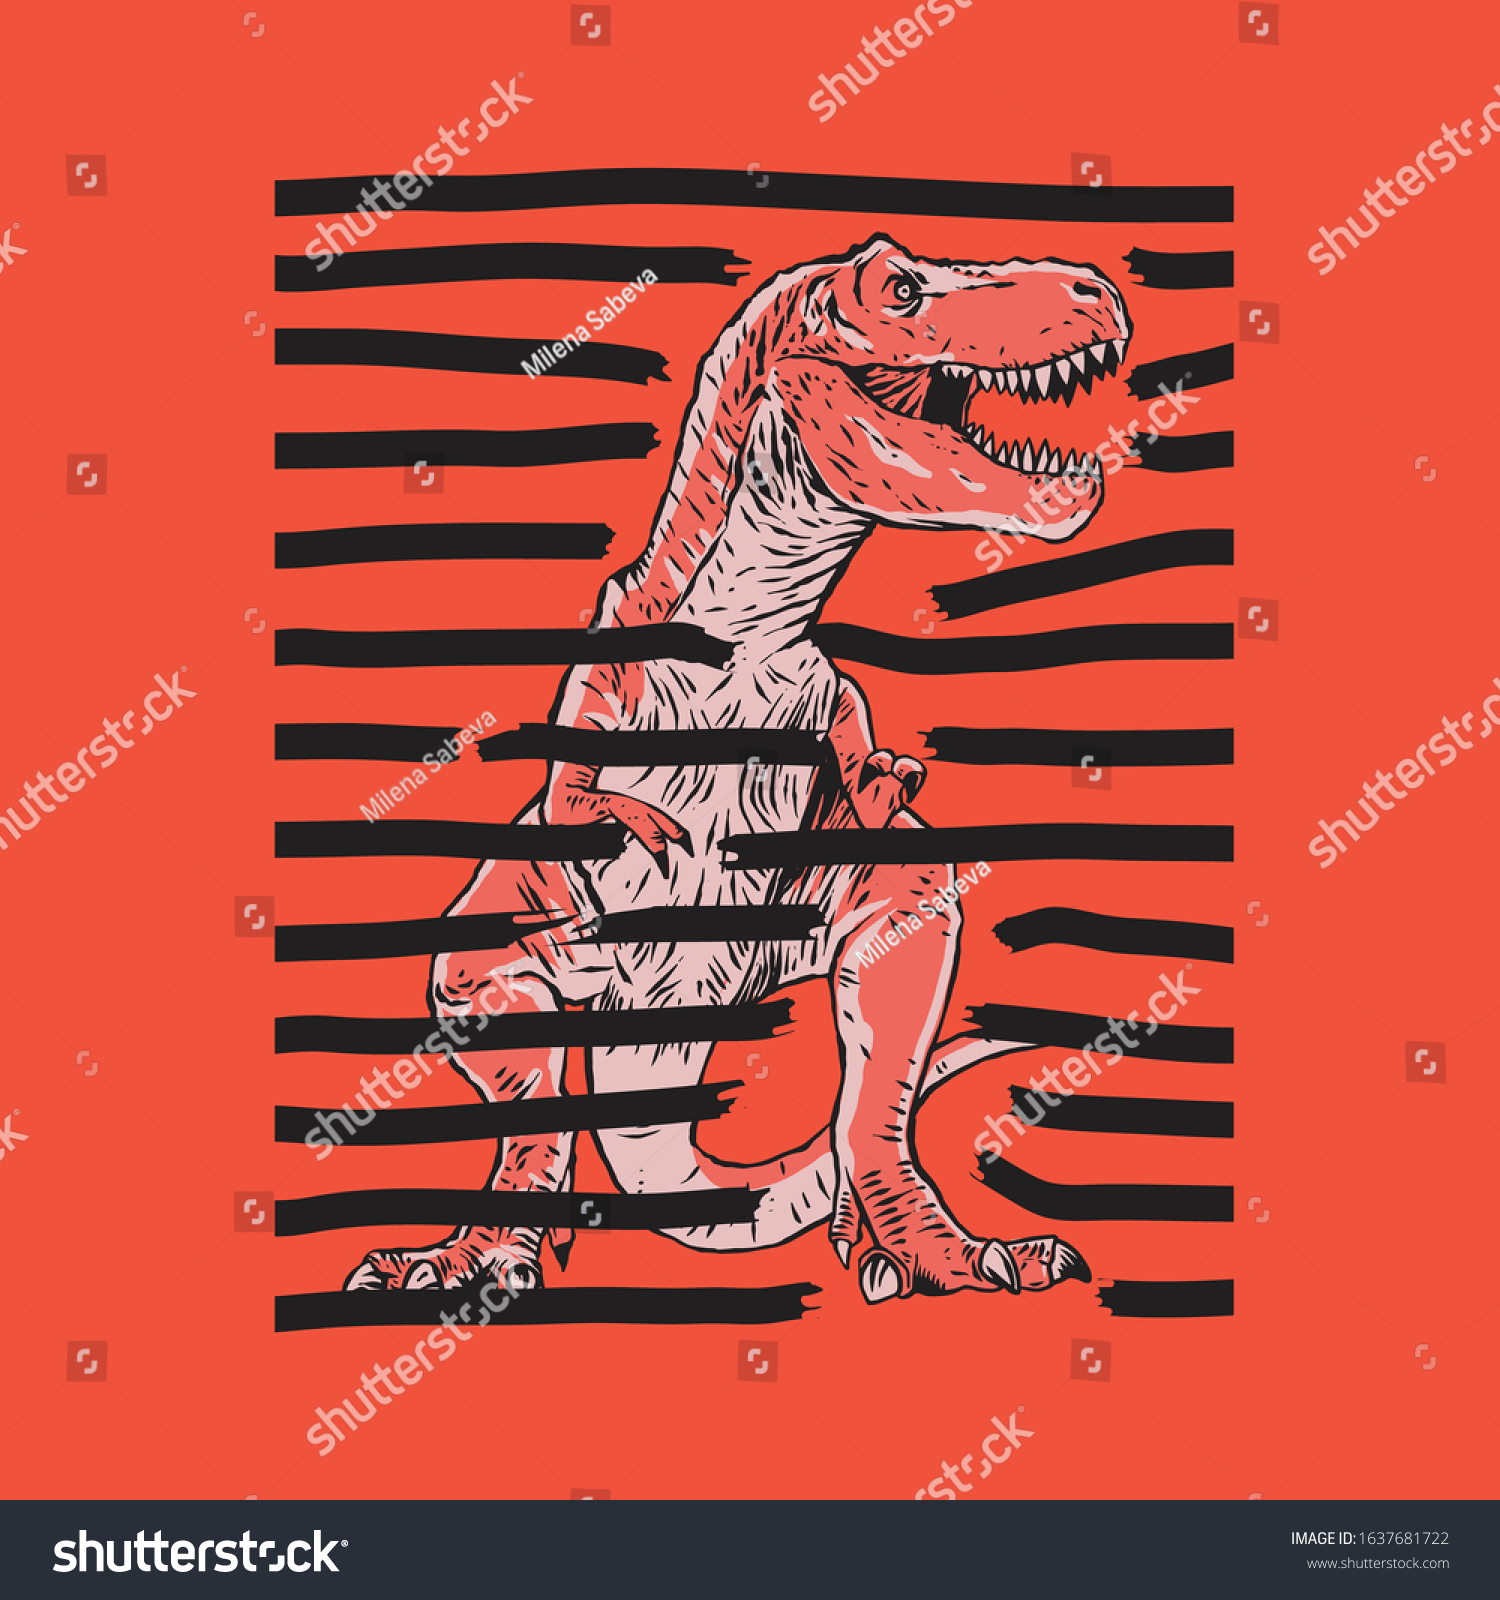 Illustration Dinosaur Smashing Cage vector de stock libre de regalías Shutterstock